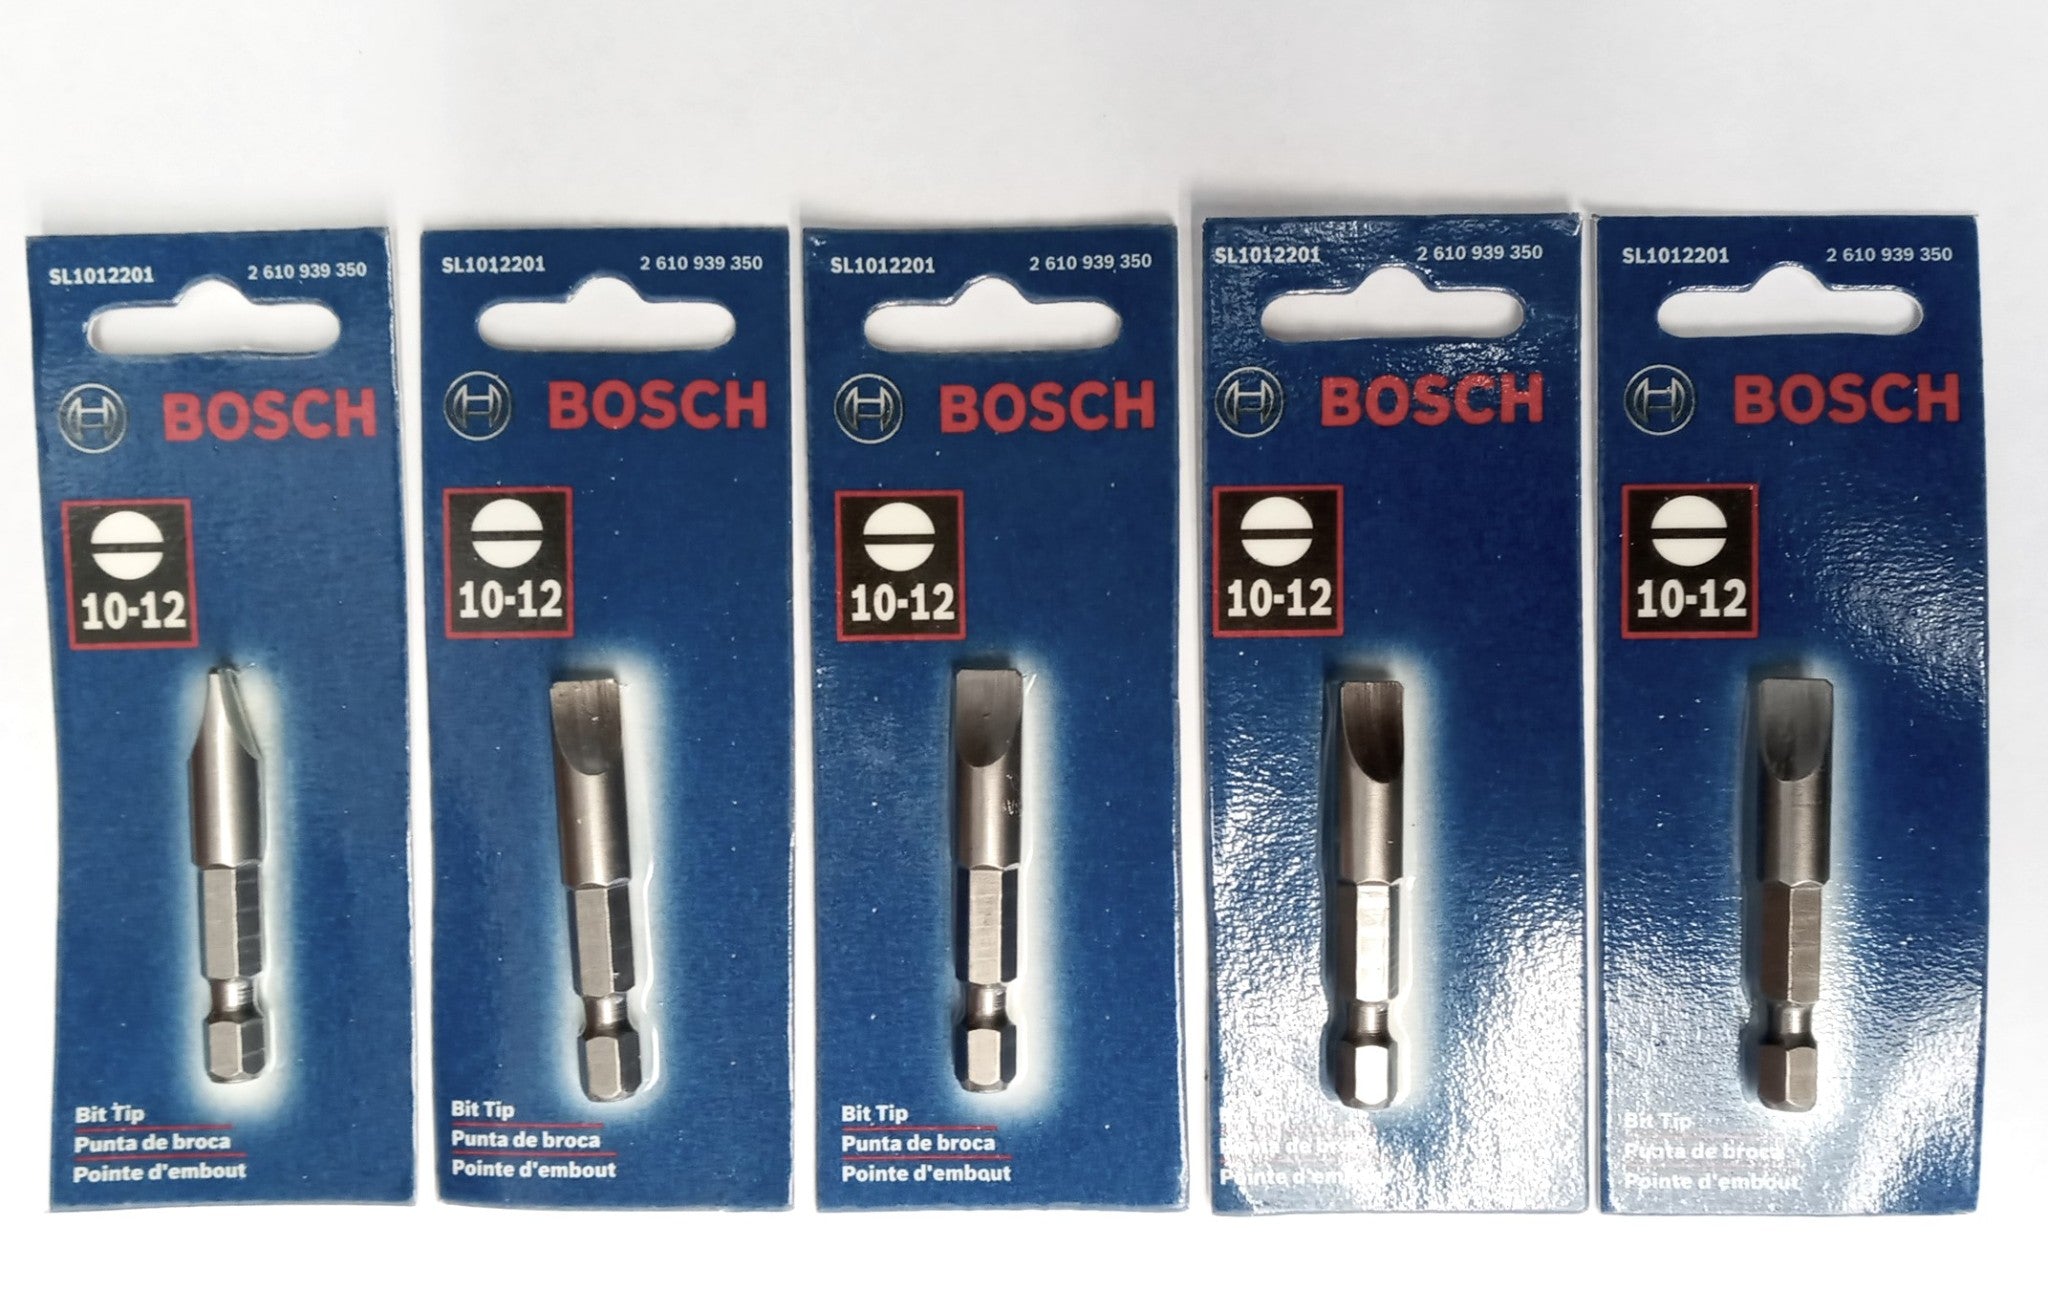 Bosch SL1012201 10-12 Slotted Bit Tips (5pcs)